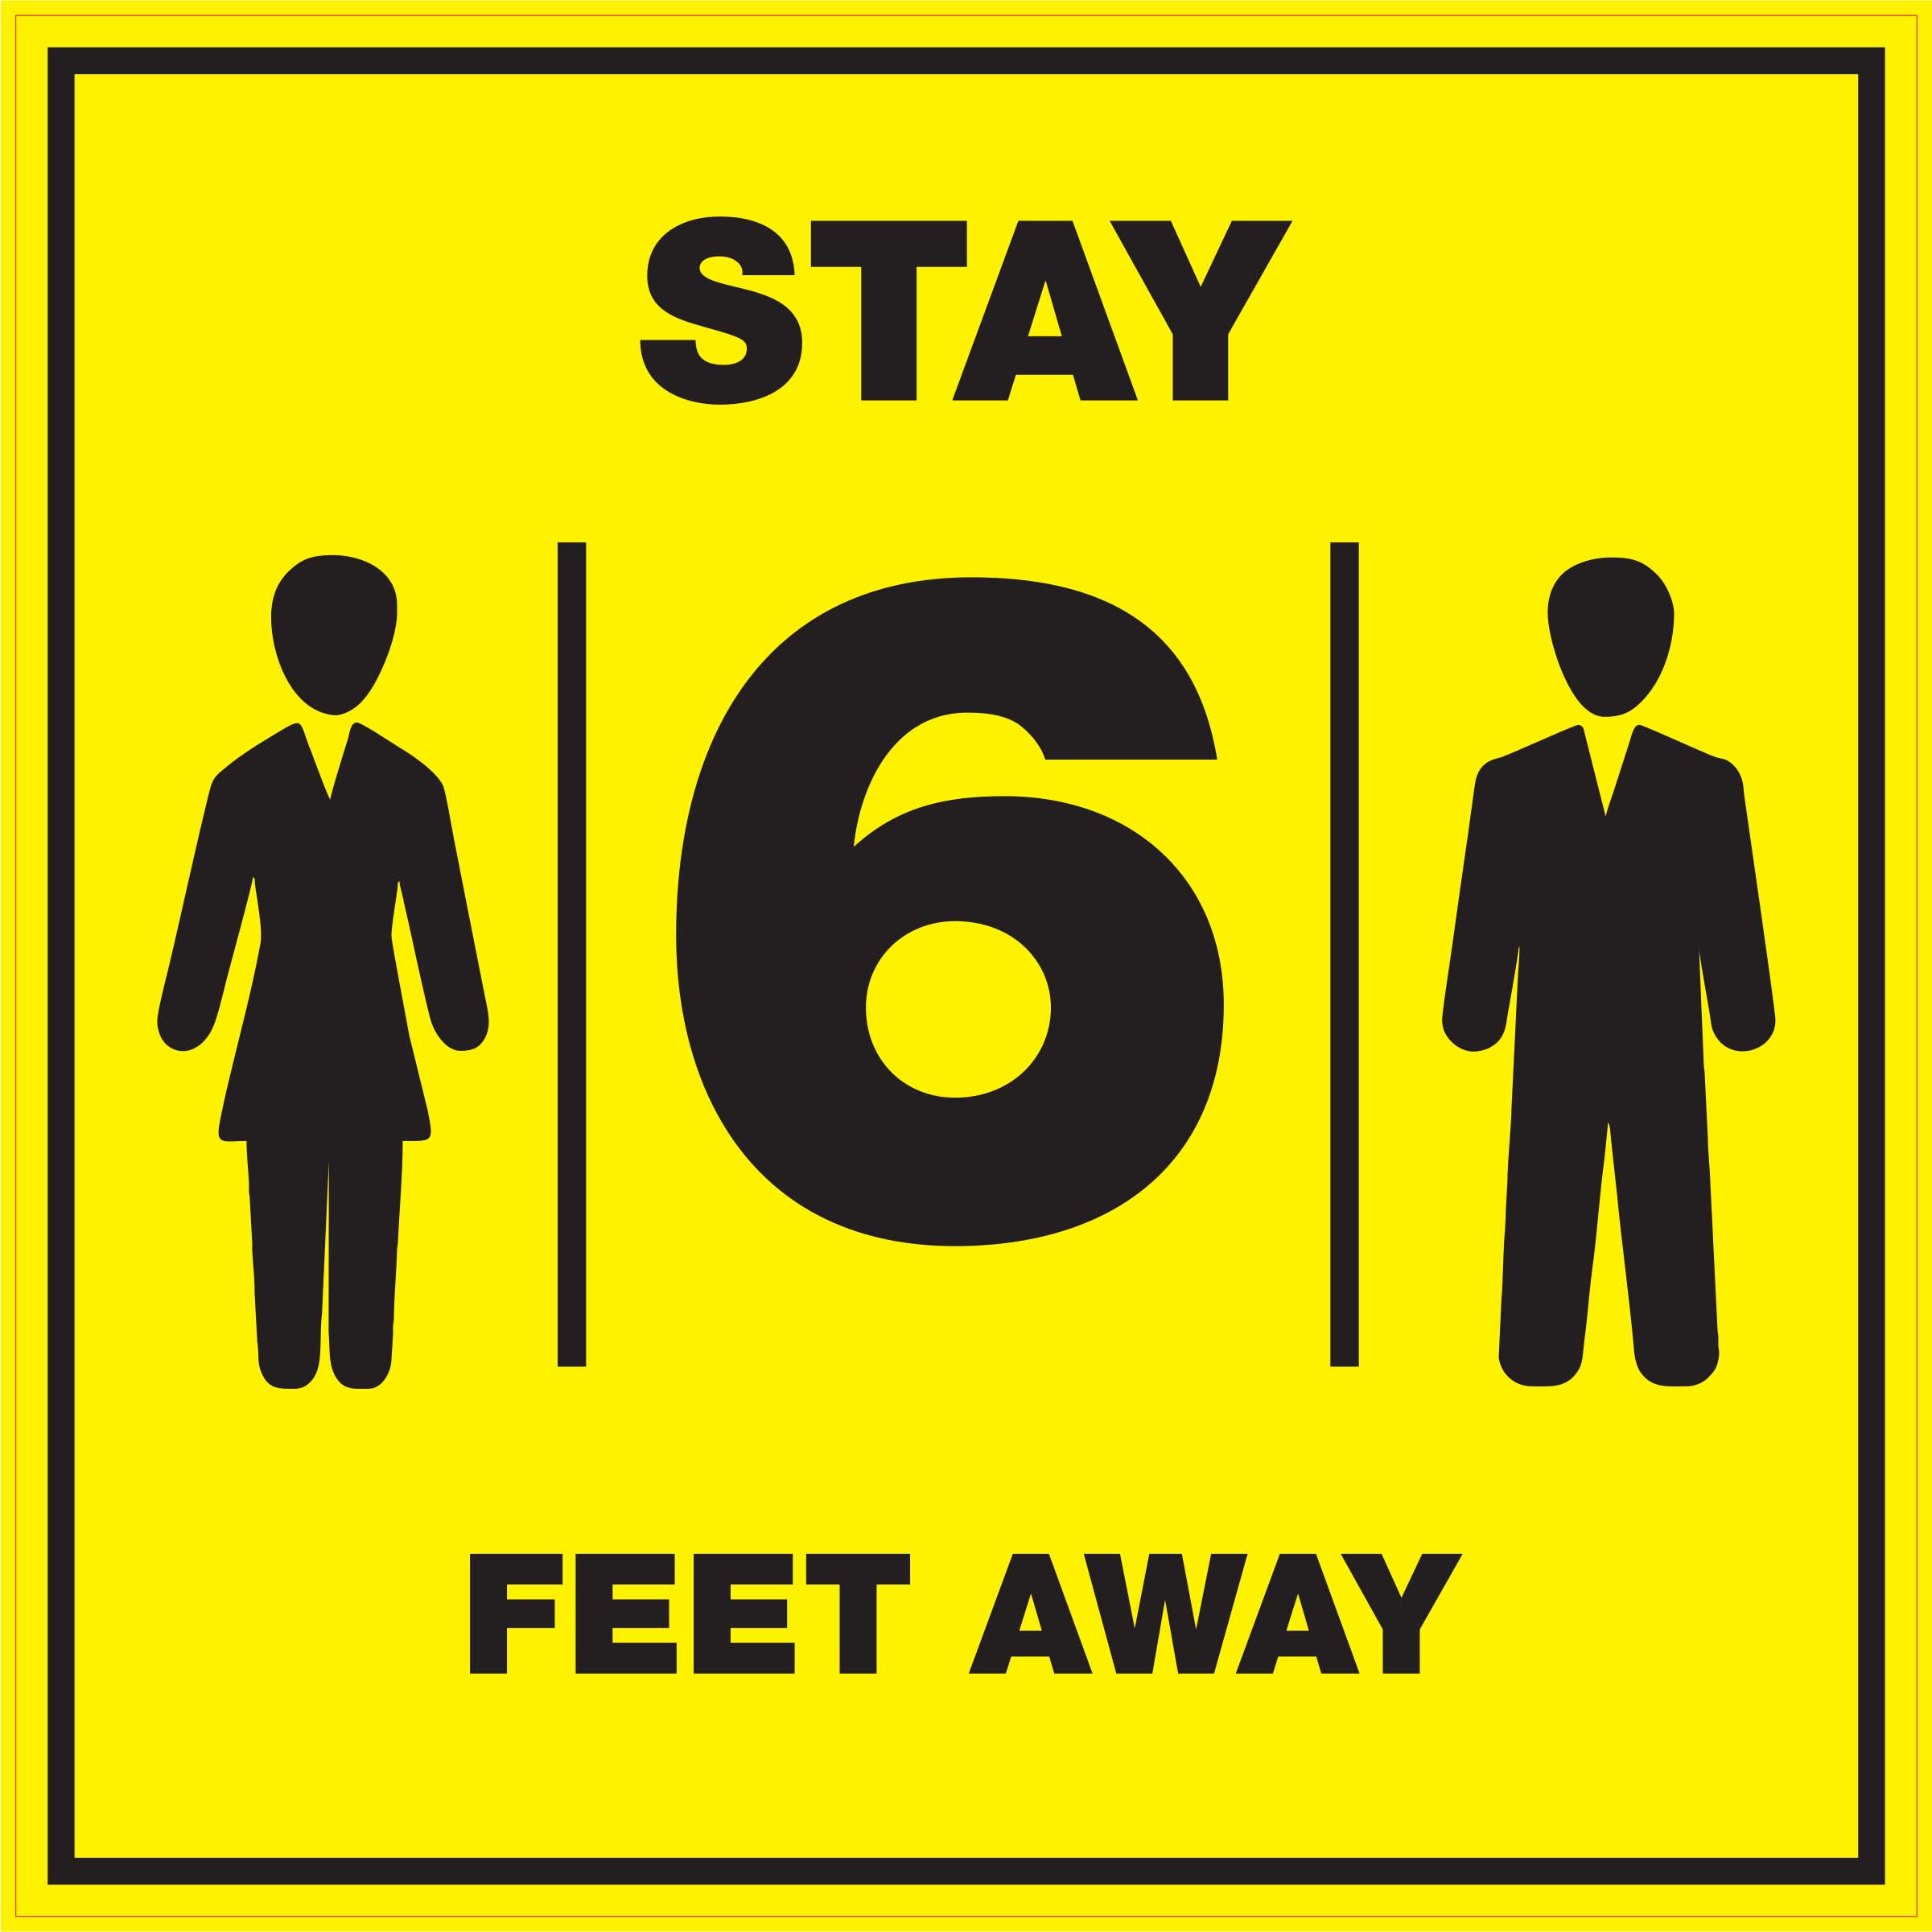 SOA - Stay 6 Feet Away 8" x 8" Decal - 6 pack